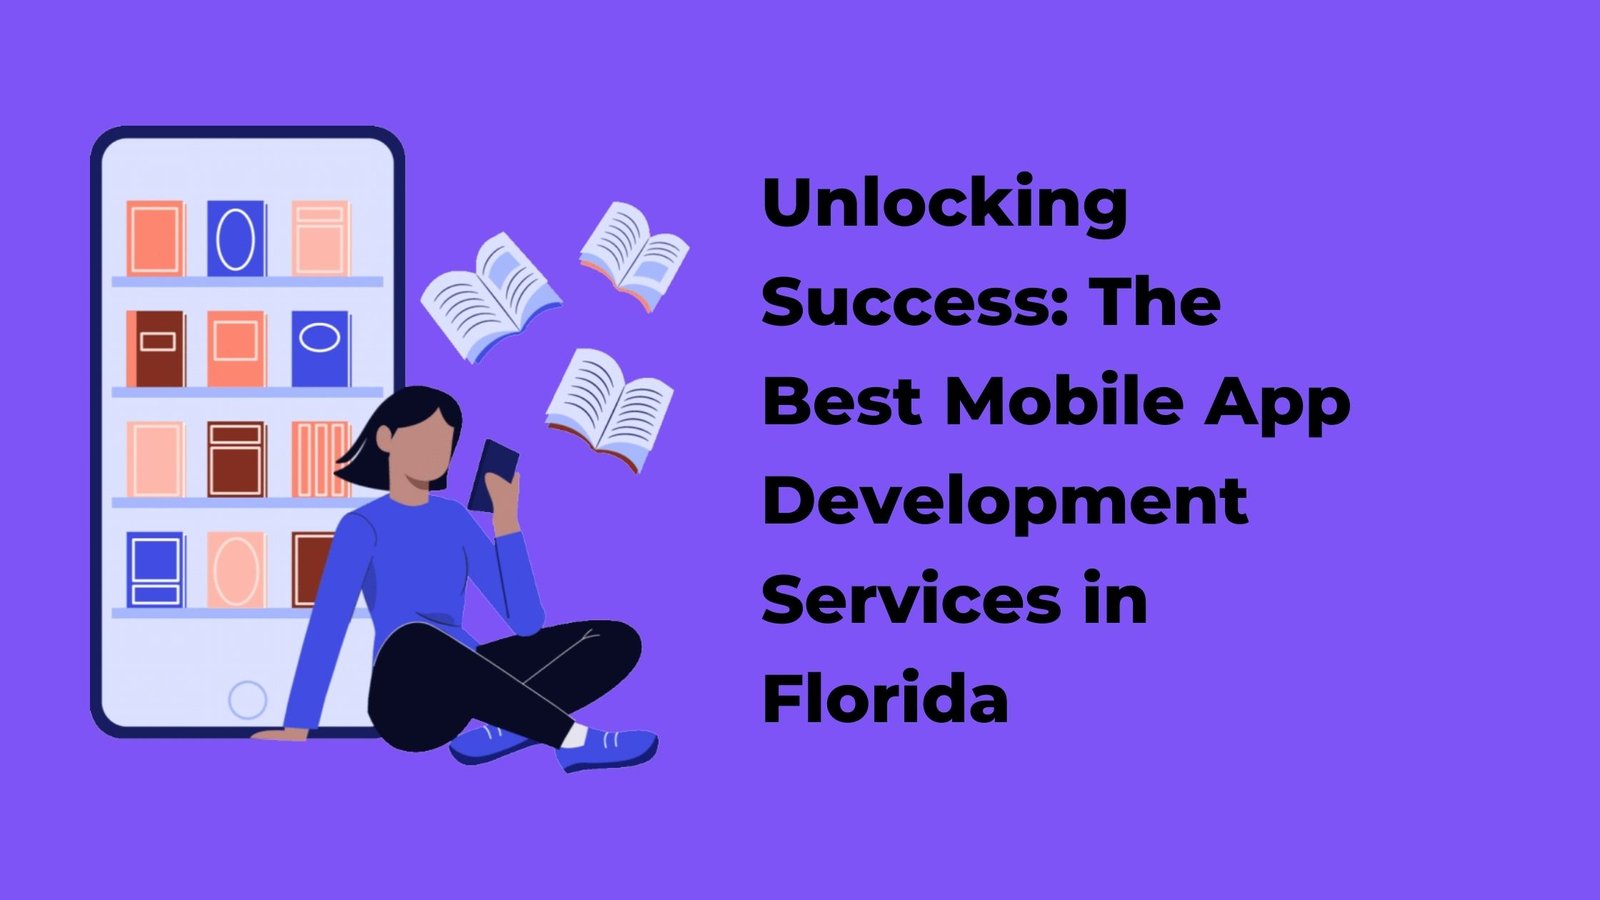 Unlocking Success: The Best Mobile App Development Services in Florida